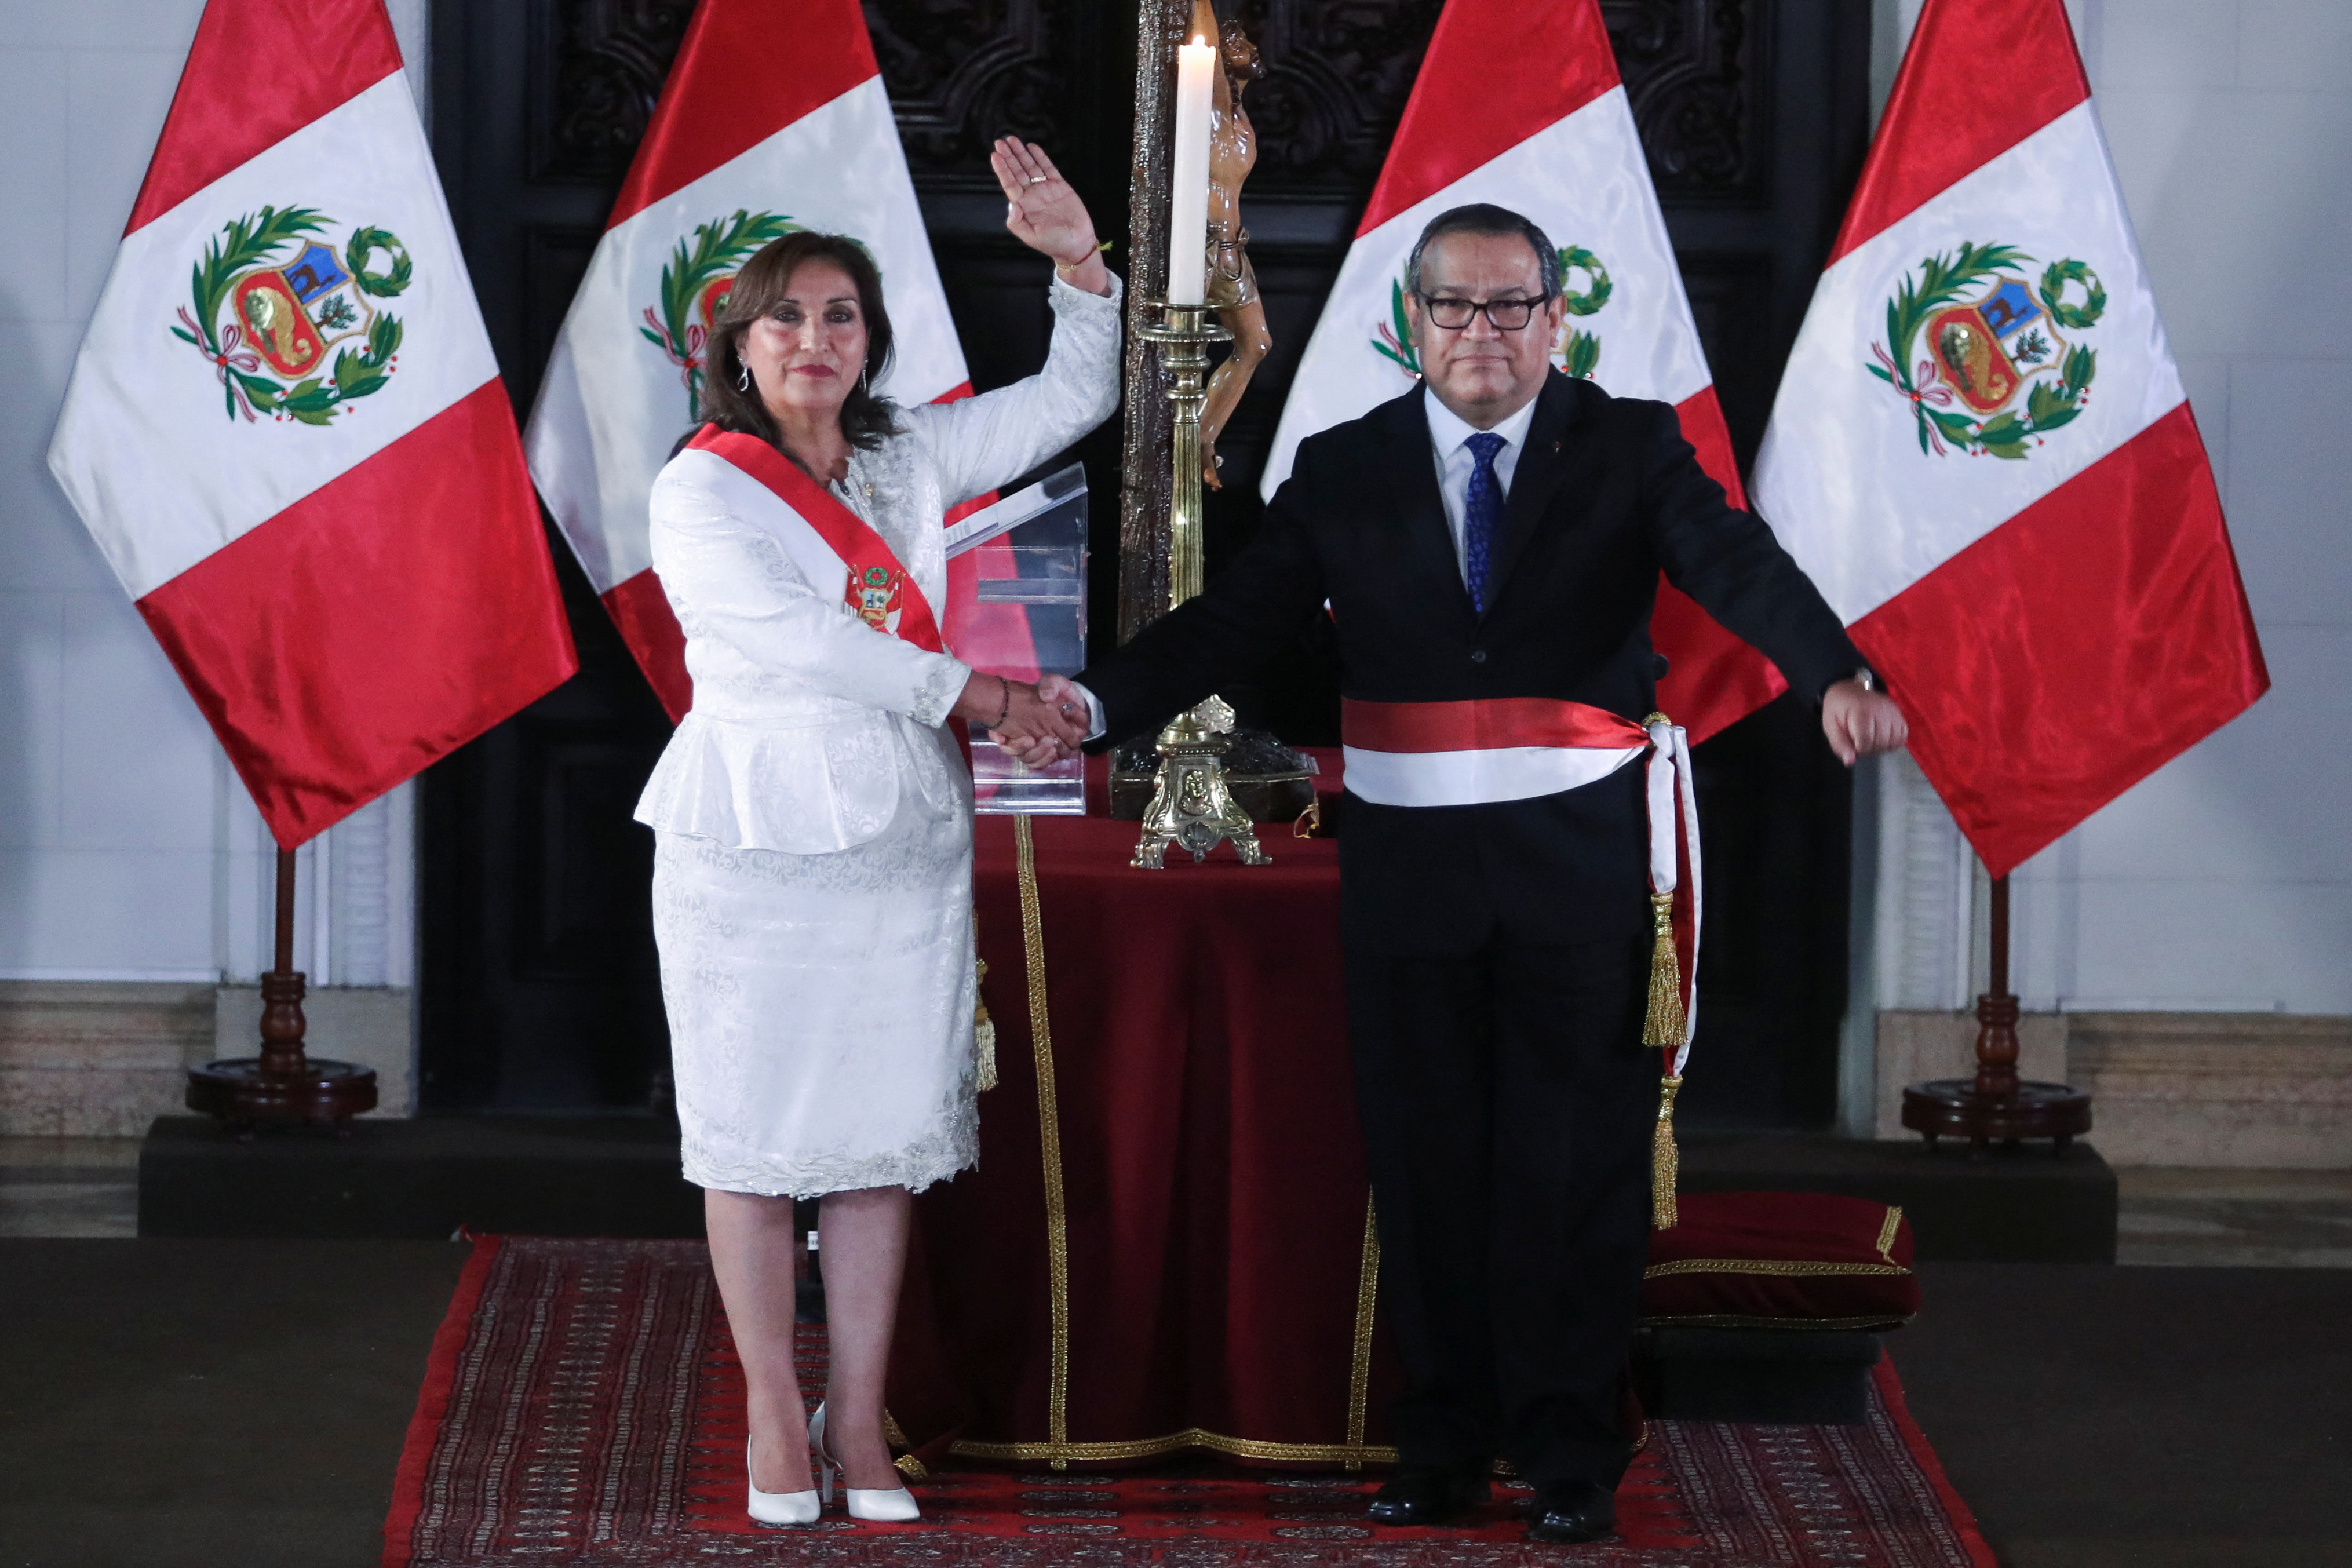 Peru's President Dina Boluarte, who took office after her predecessor Pedro Castillo was ousted, salutes next to Alberto Otarola, Minister of Defence, in Lima, Peru December 10, 2022. REUTERS/Sebastian Castaneda